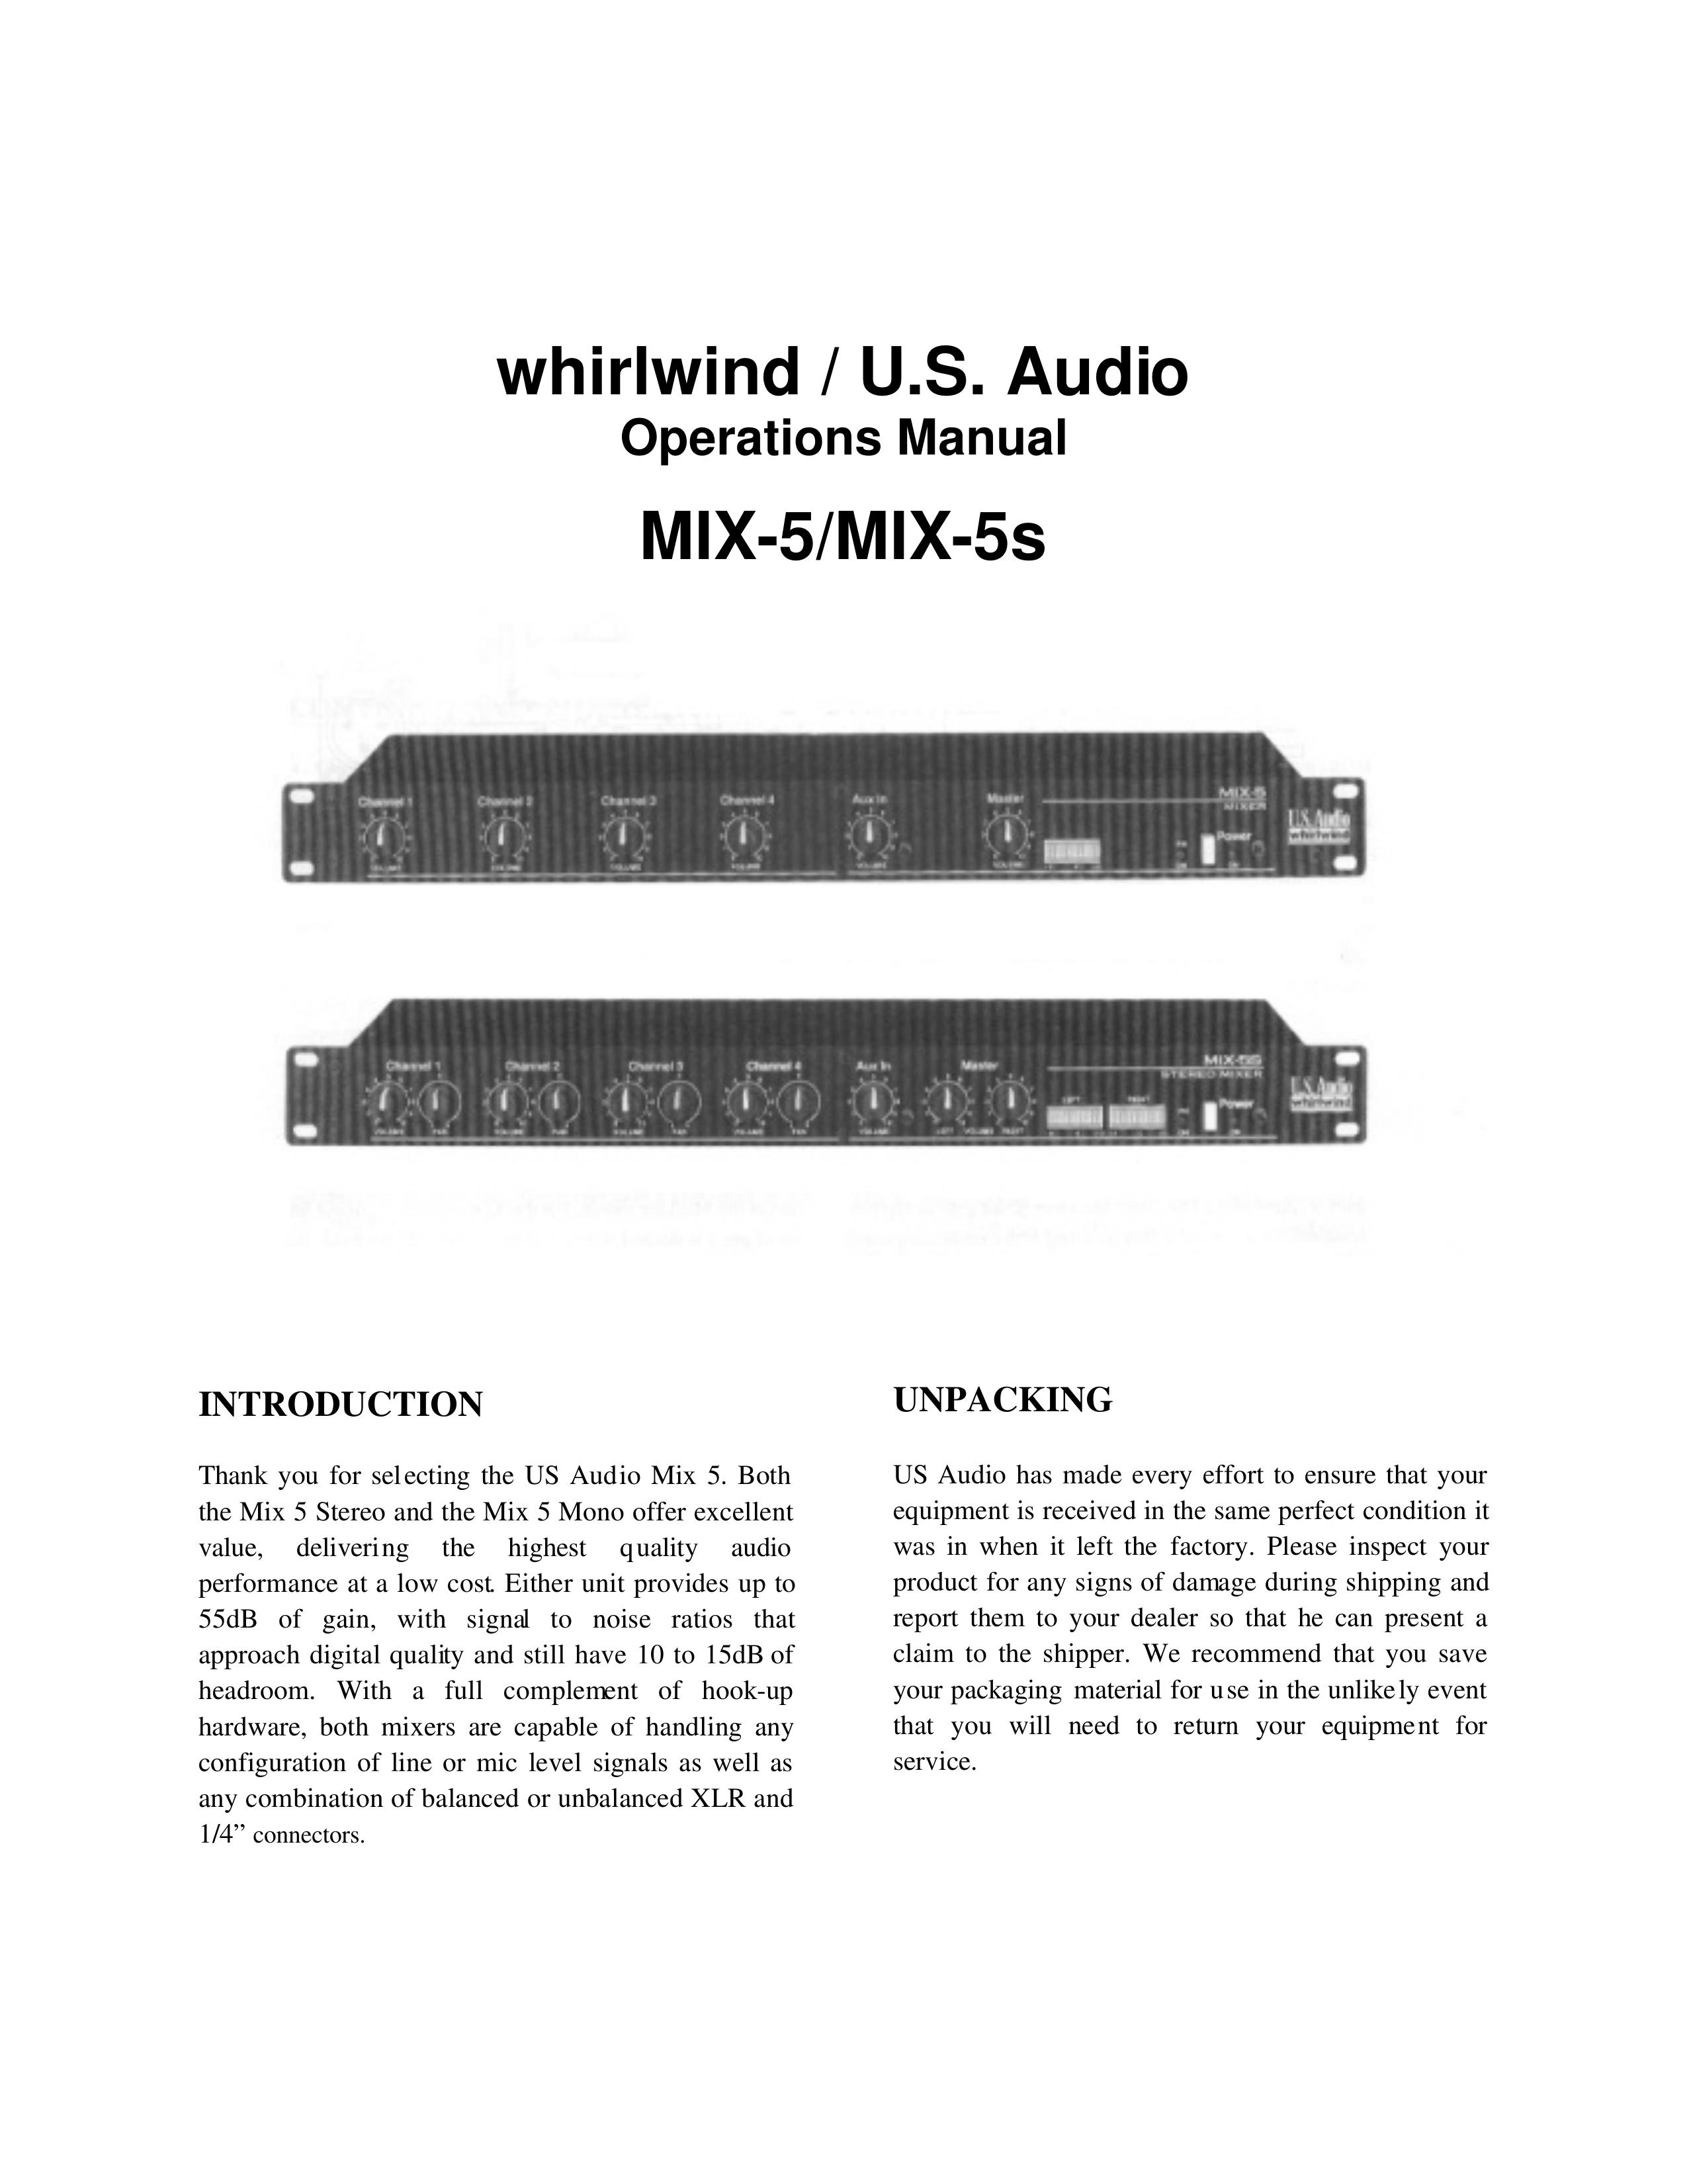 Whirlwind MIX-5 Music Mixer User Manual